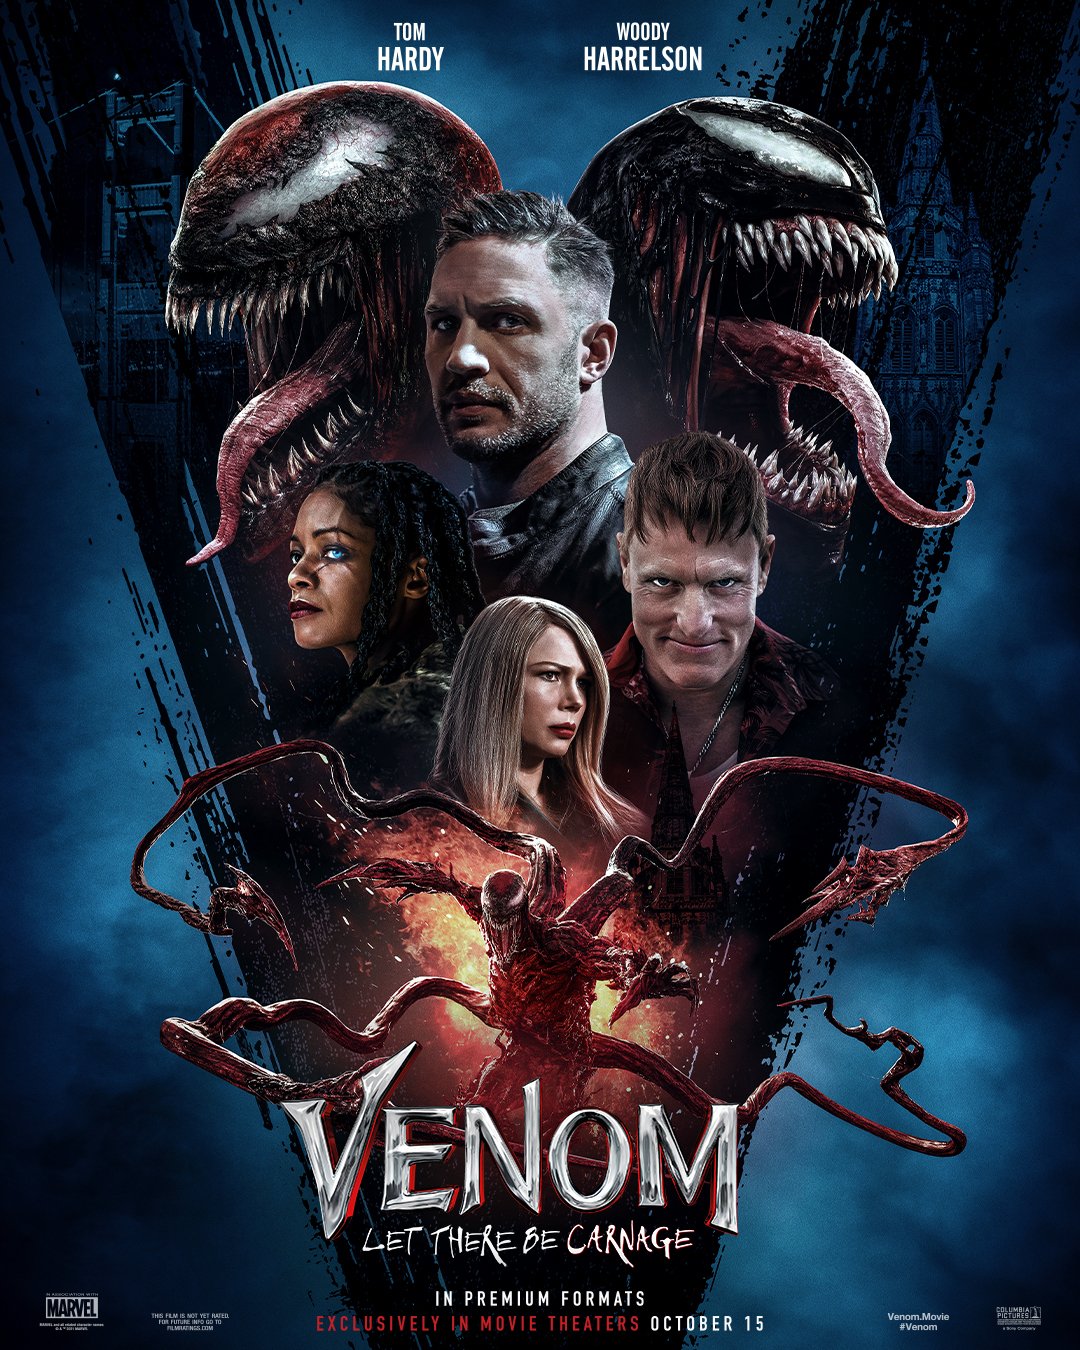 Stiahni si Filmy bez titulků Venom 2: Carnage prichazi / Venom: Let There Be Carnage (EN)(2021)[WEBRip][1080p] = CSFD 64%